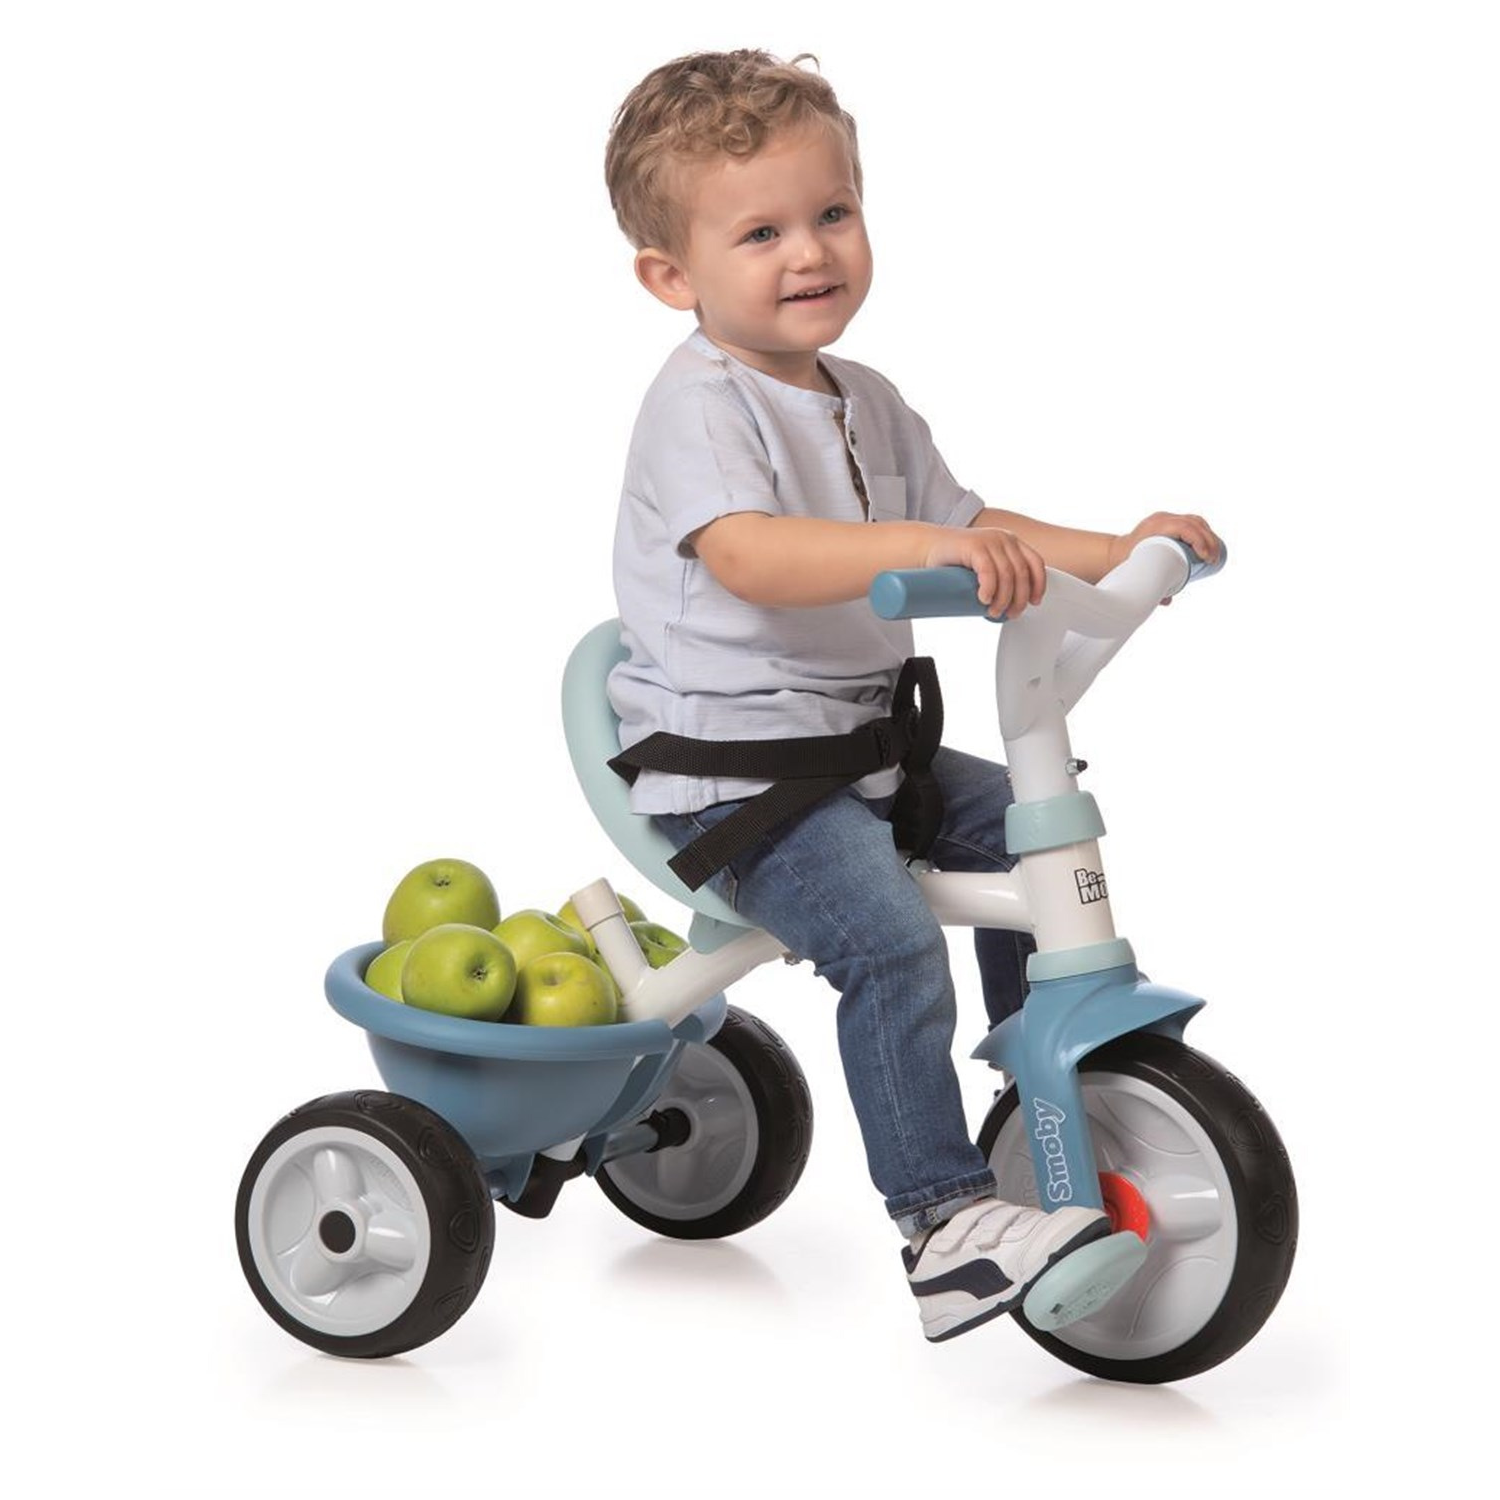 Smoby Be Move Üç Tekerlekli Bisiklet Seti - Mavi 740331 | Toysall